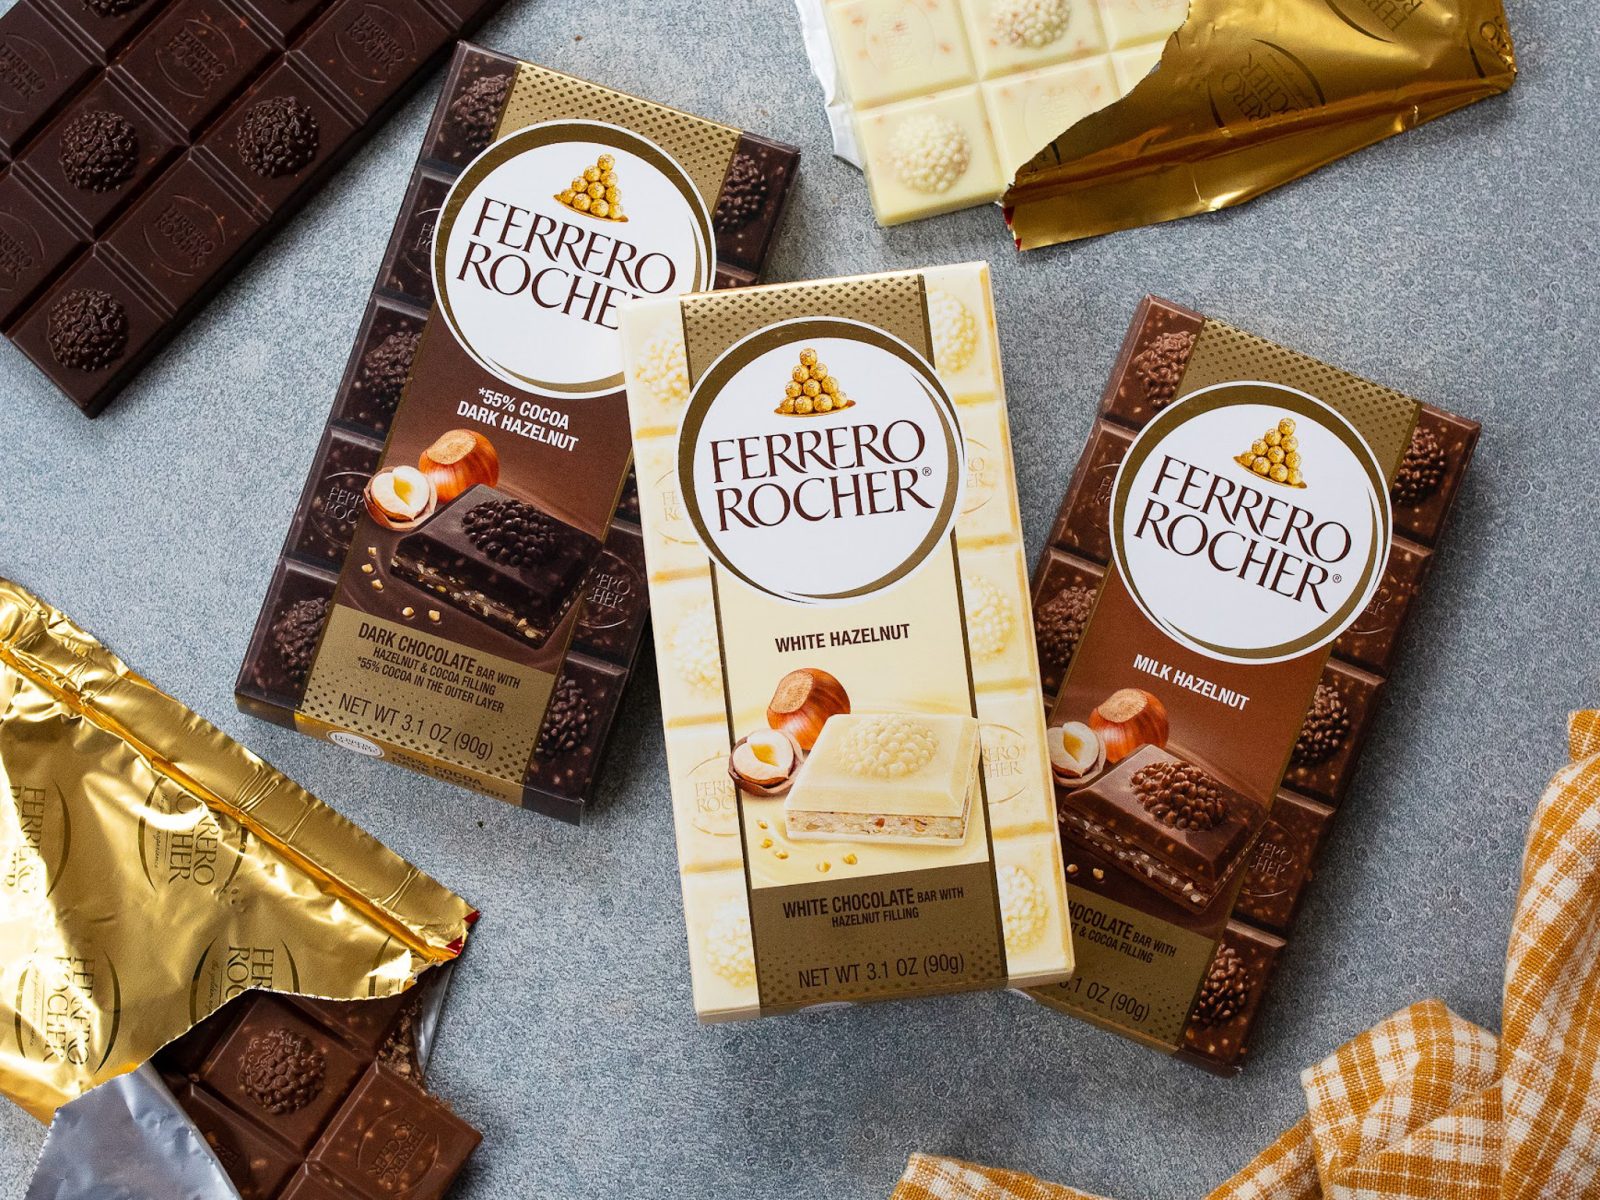 Ferrero Rocher Chocolate Bar Just $1.50 At Kroger